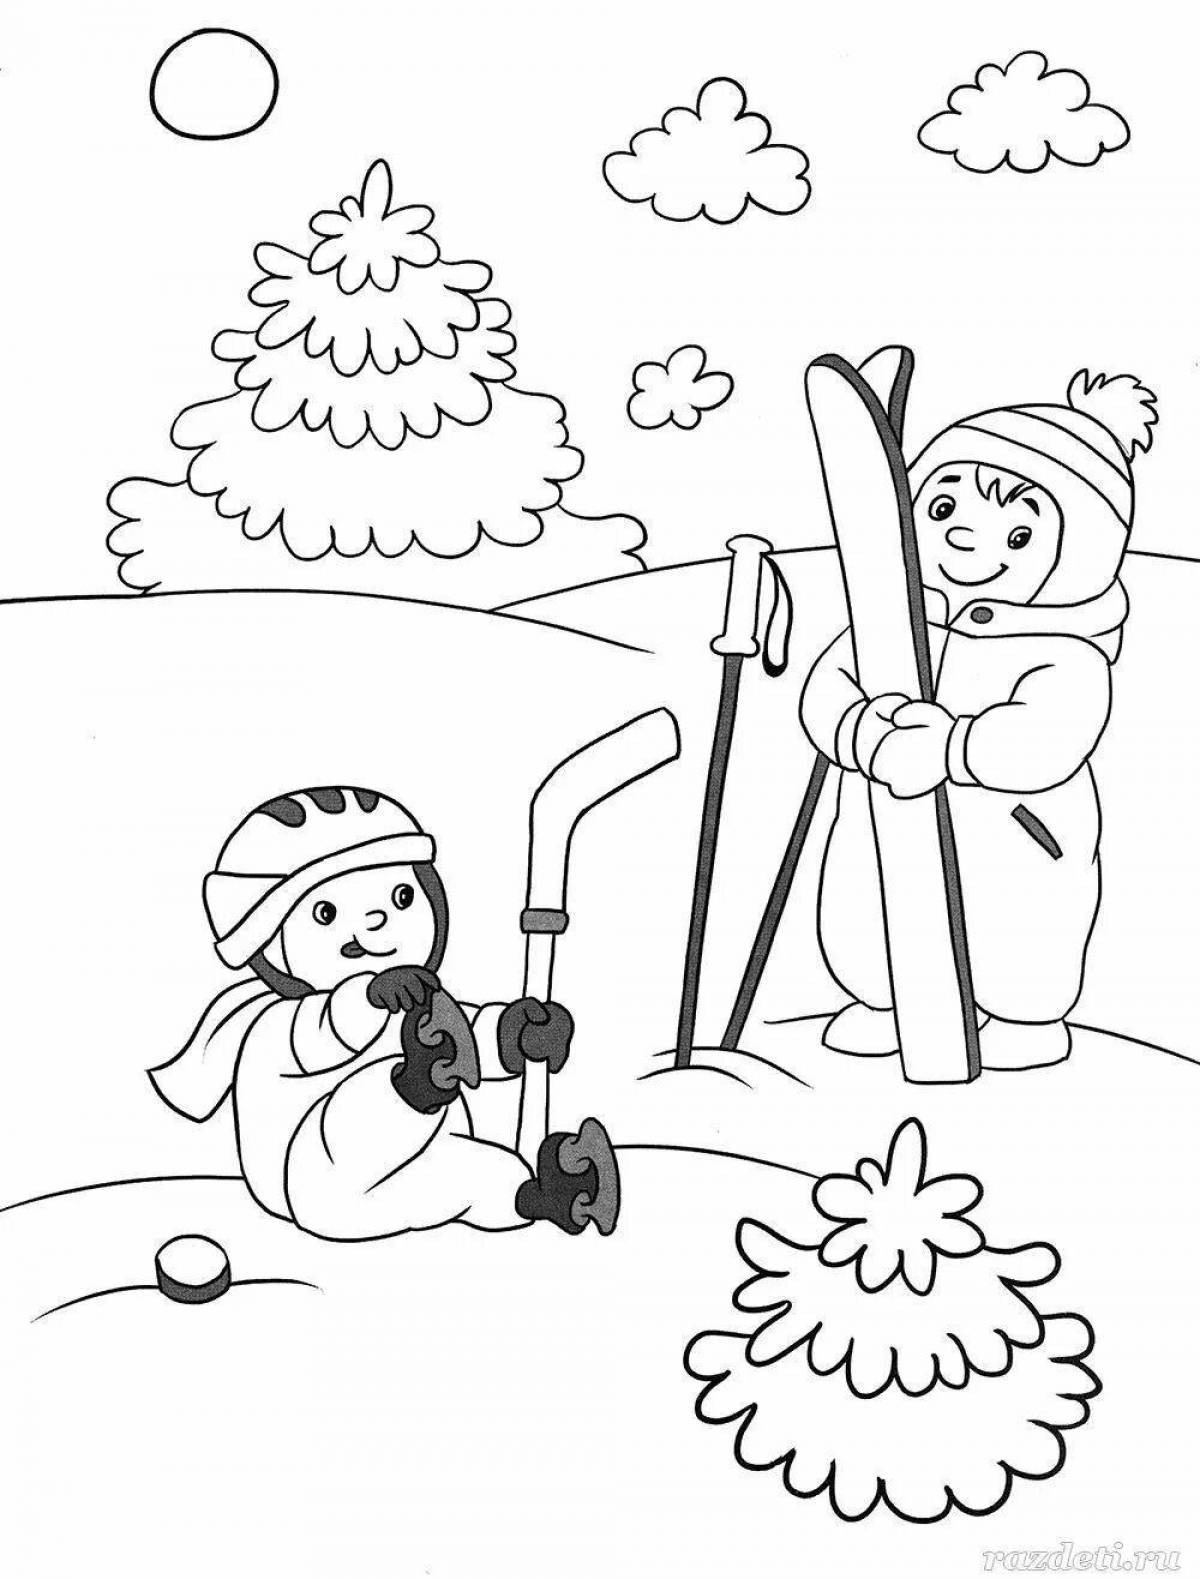 Jolly winter drawing